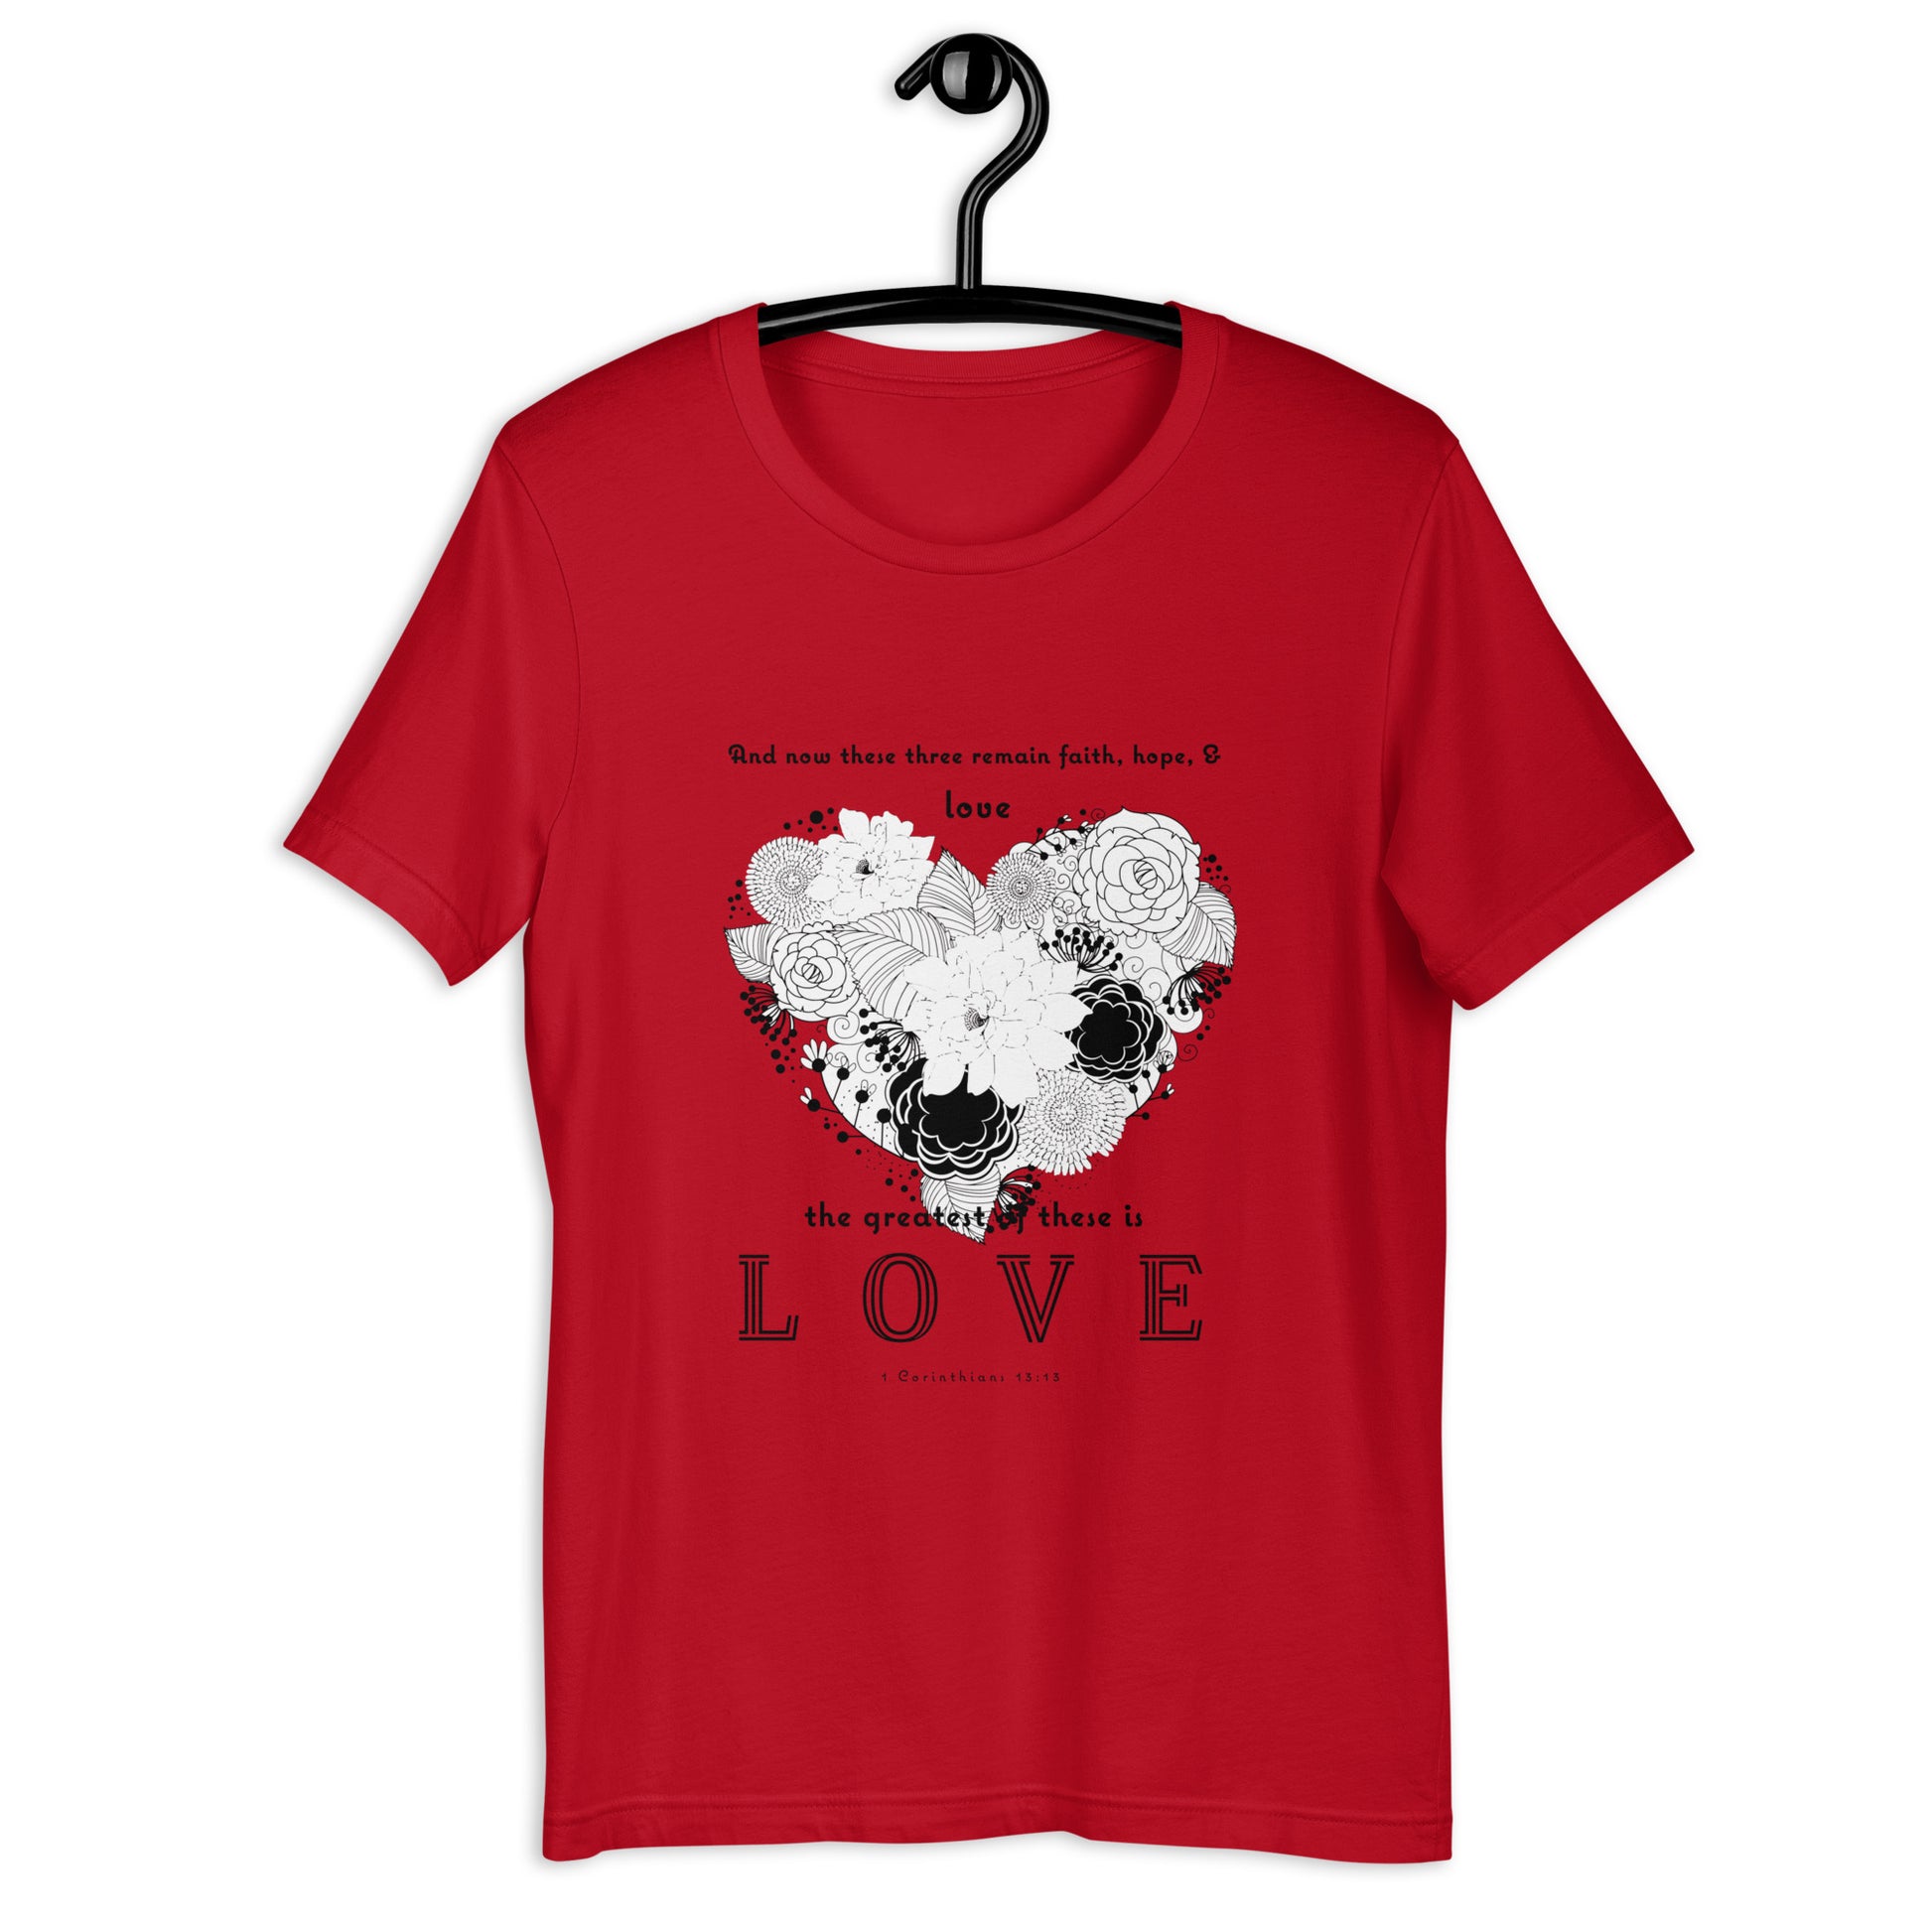 1 Corinthians 13:13 Greatest Love T-Shirt red